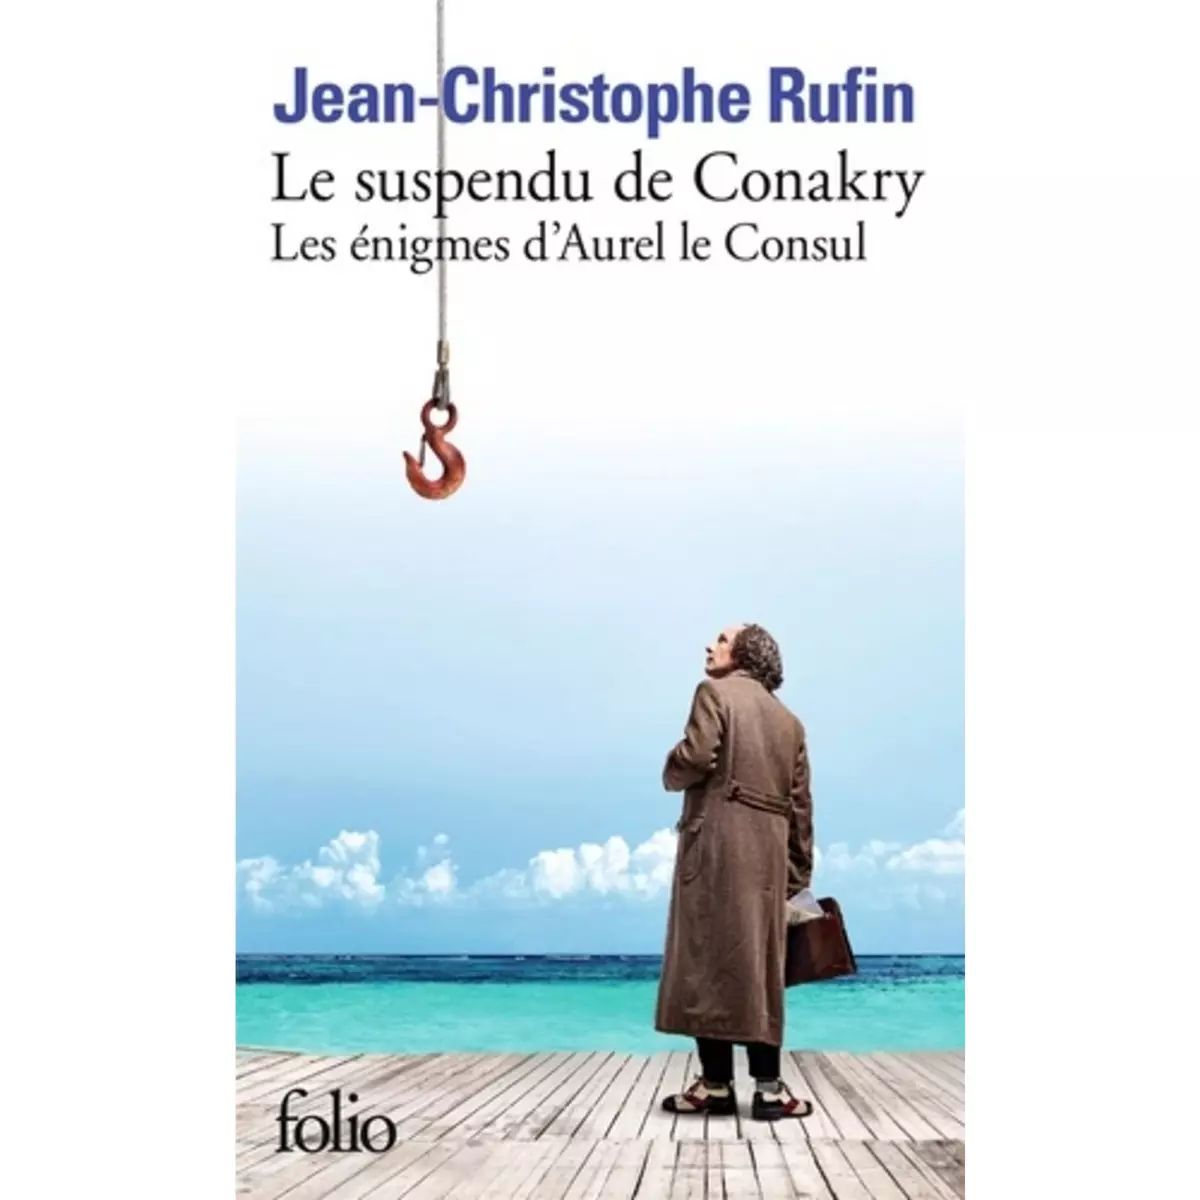  LE SUSPENDU DE CONAKRY, Rufin Jean-Christophe